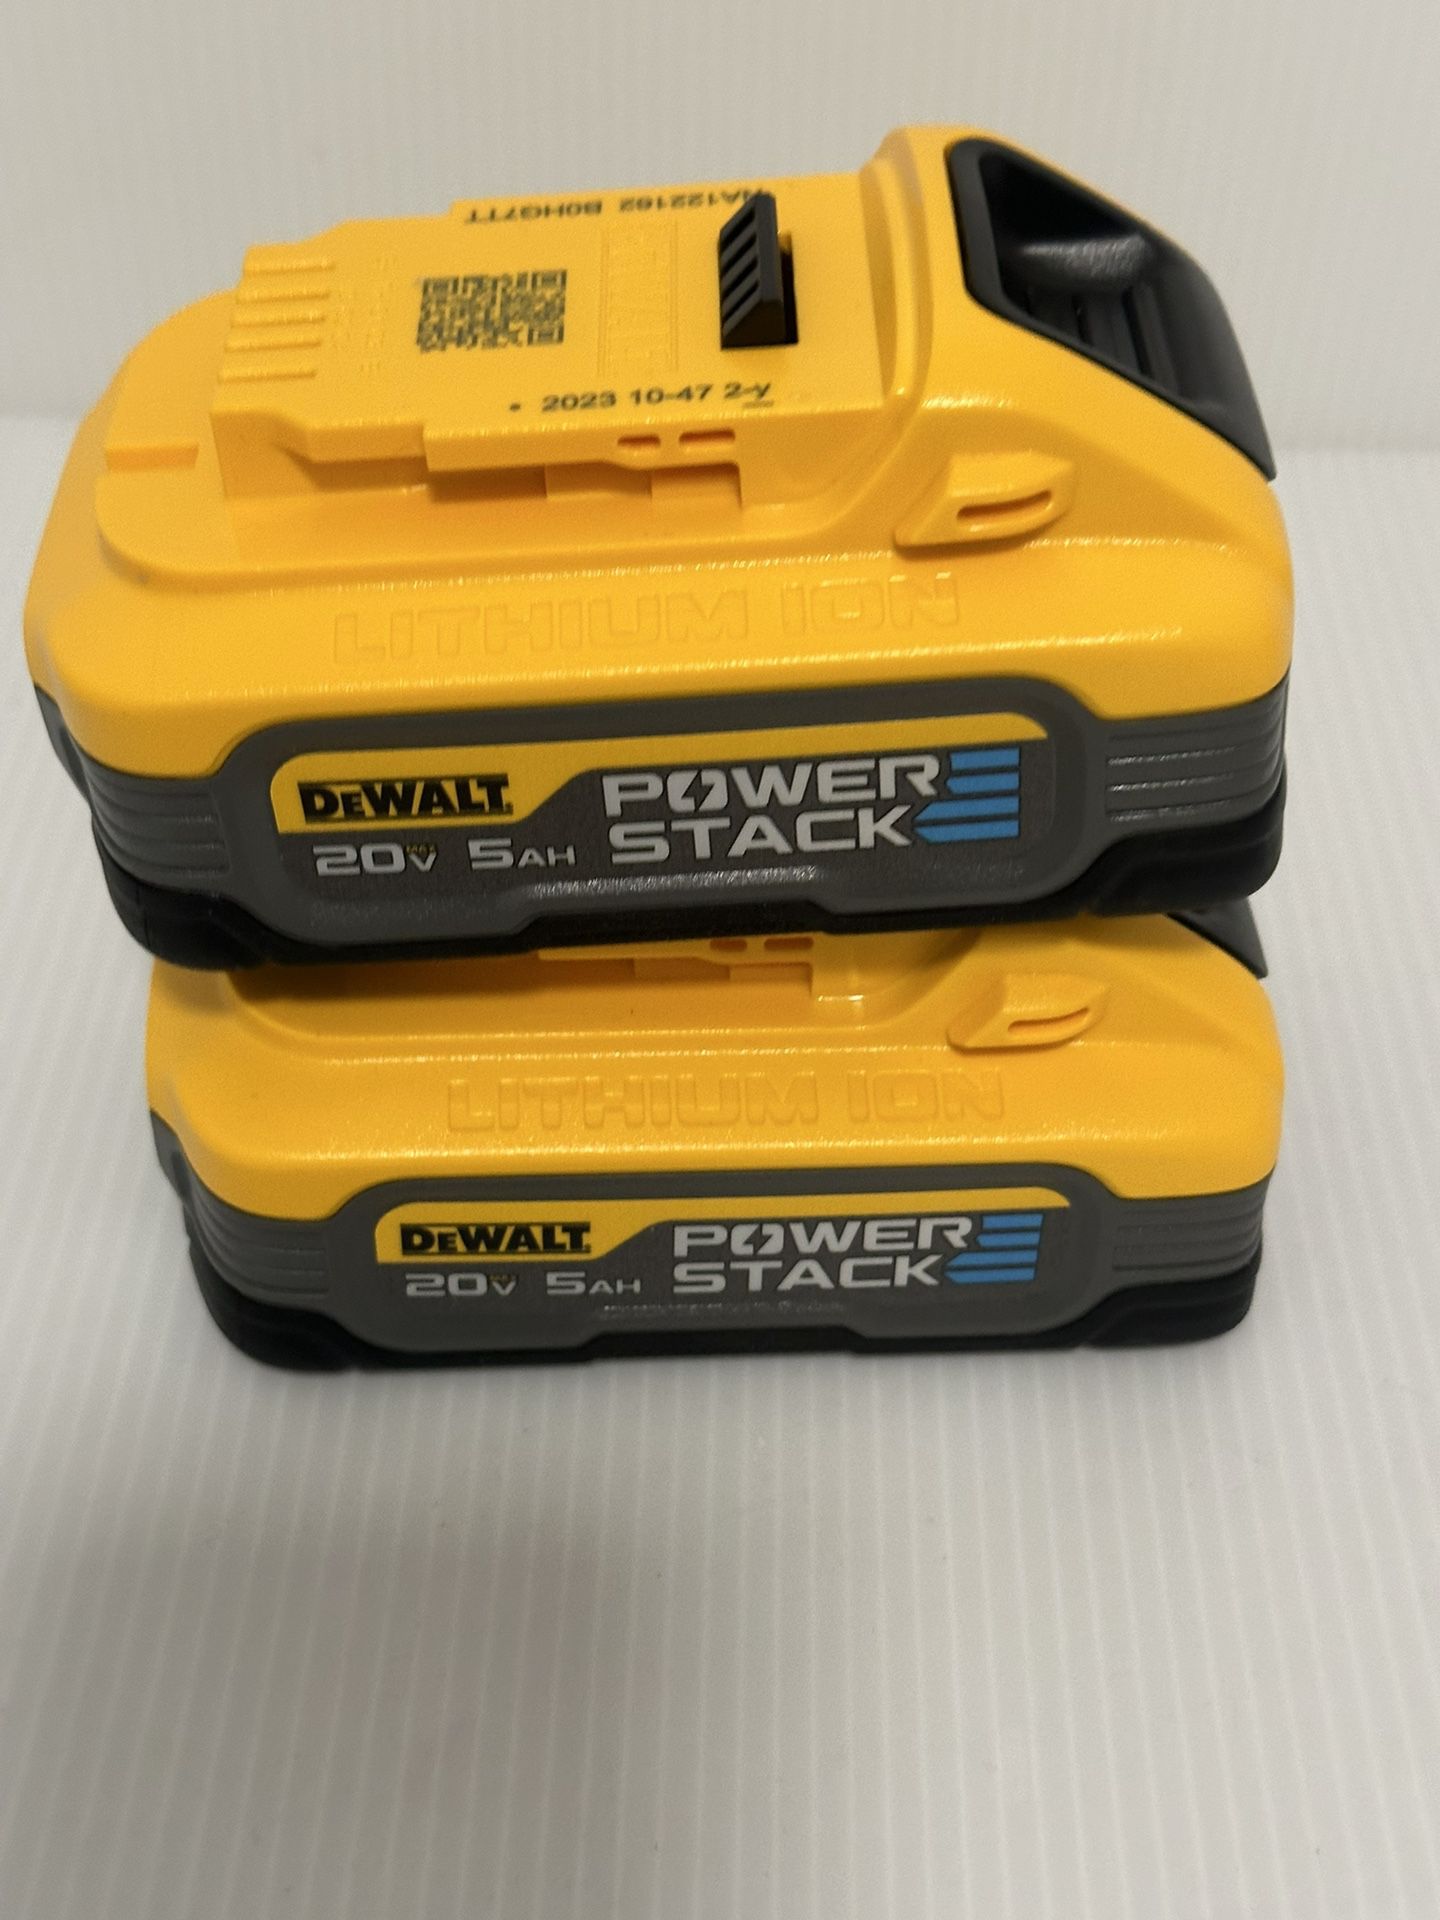 Dewalt 20V Power Stack Battery With Fast Charger 